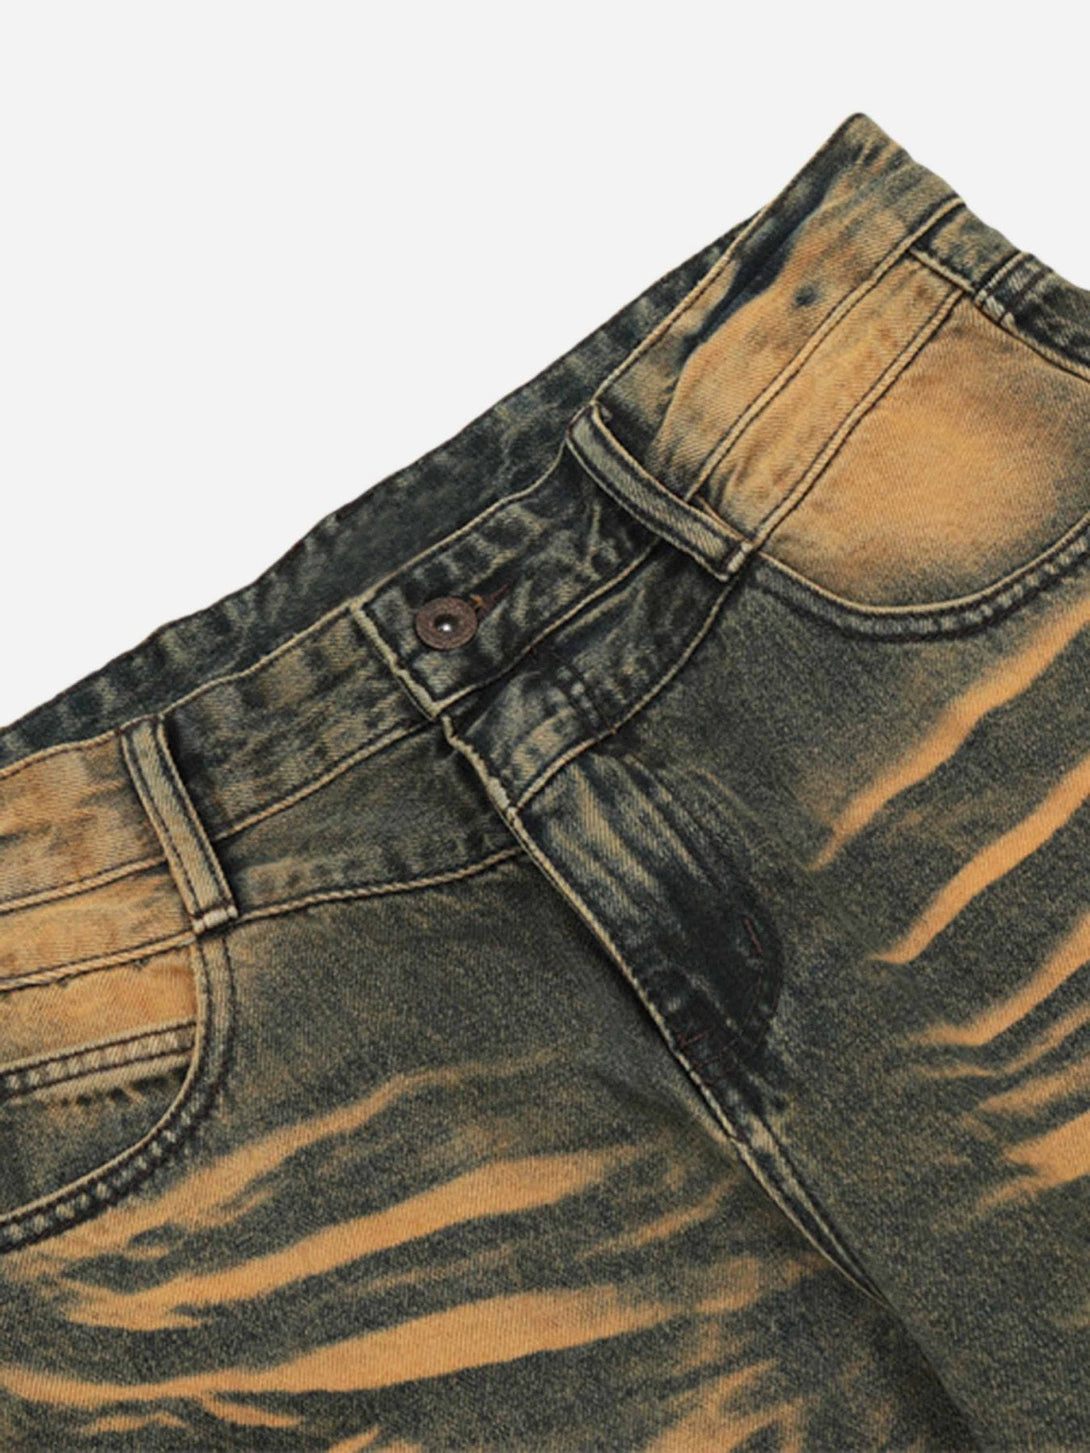 Majesda® - Colorblocked Airbrushed Wide Leg Jeans- Outfit Ideas - Streetwear Fashion - majesda.com